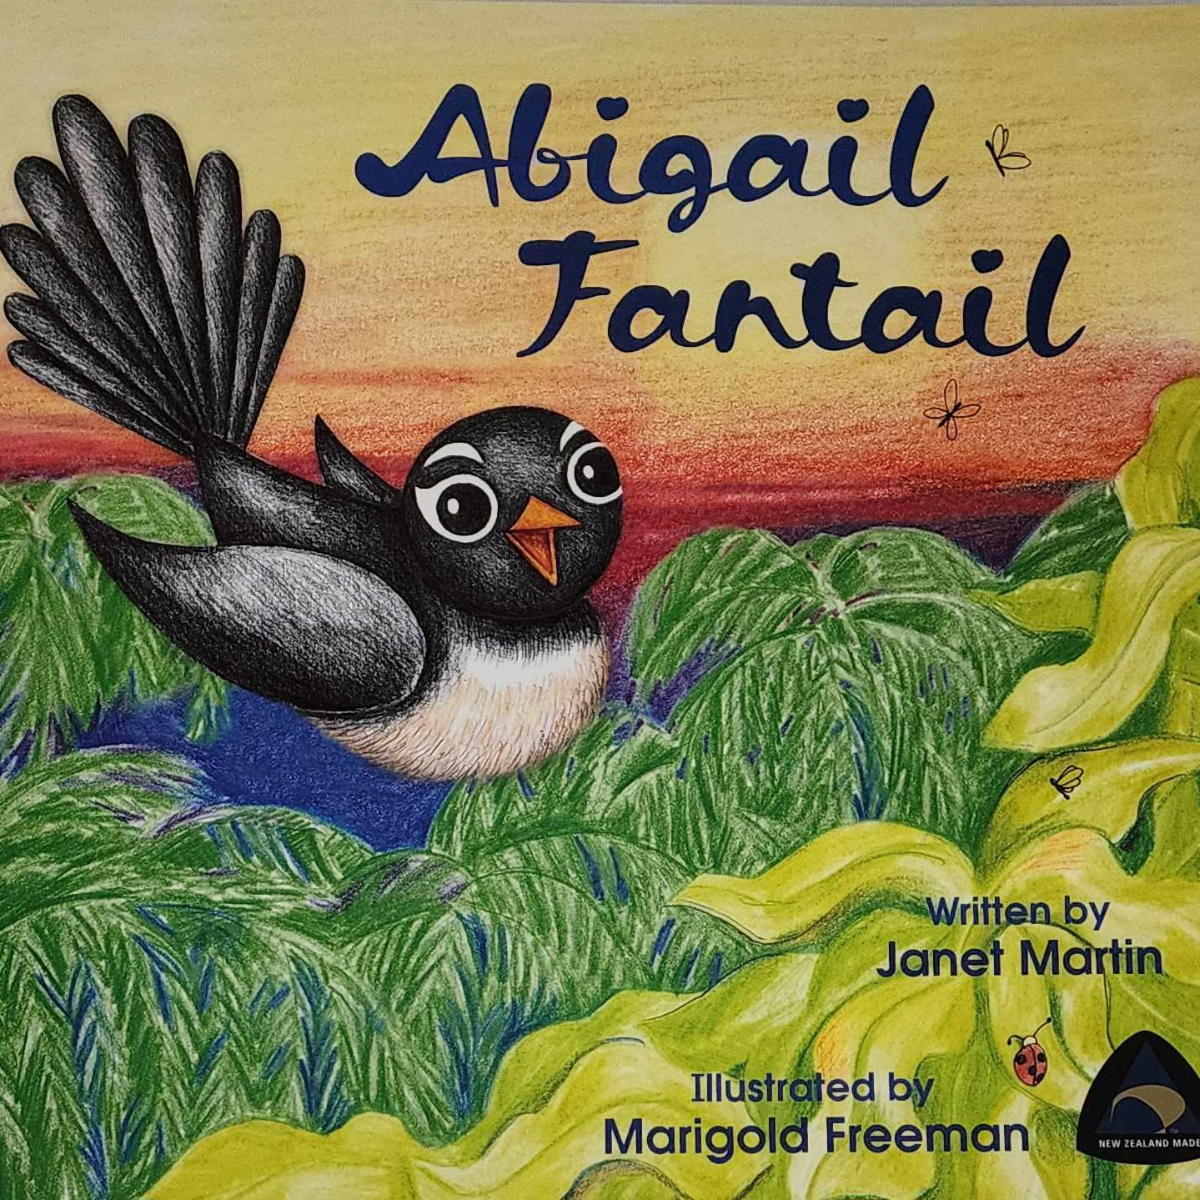 Abigail Fantail